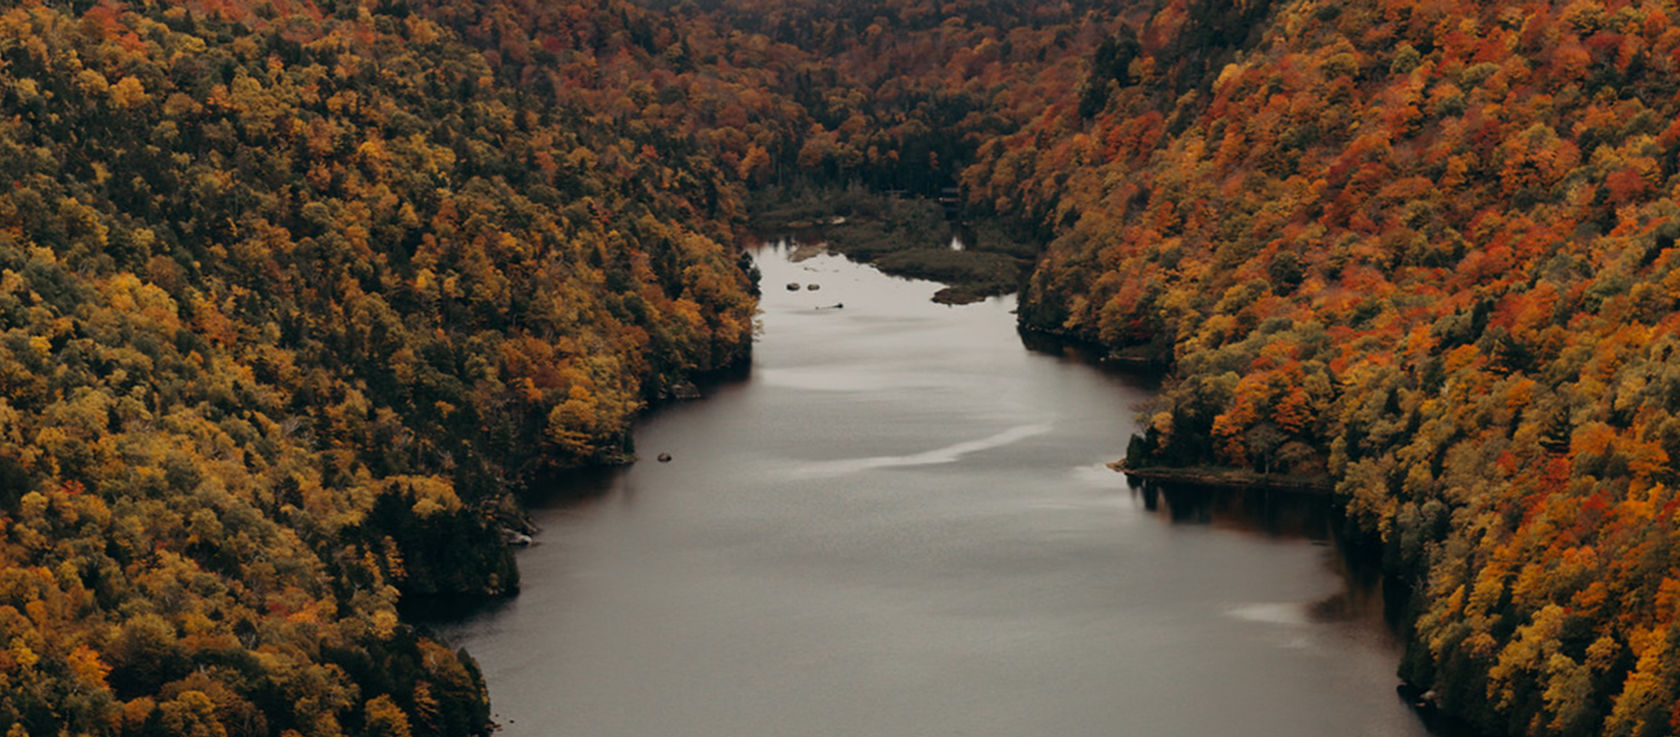 fall trees of many colors encircling a lake